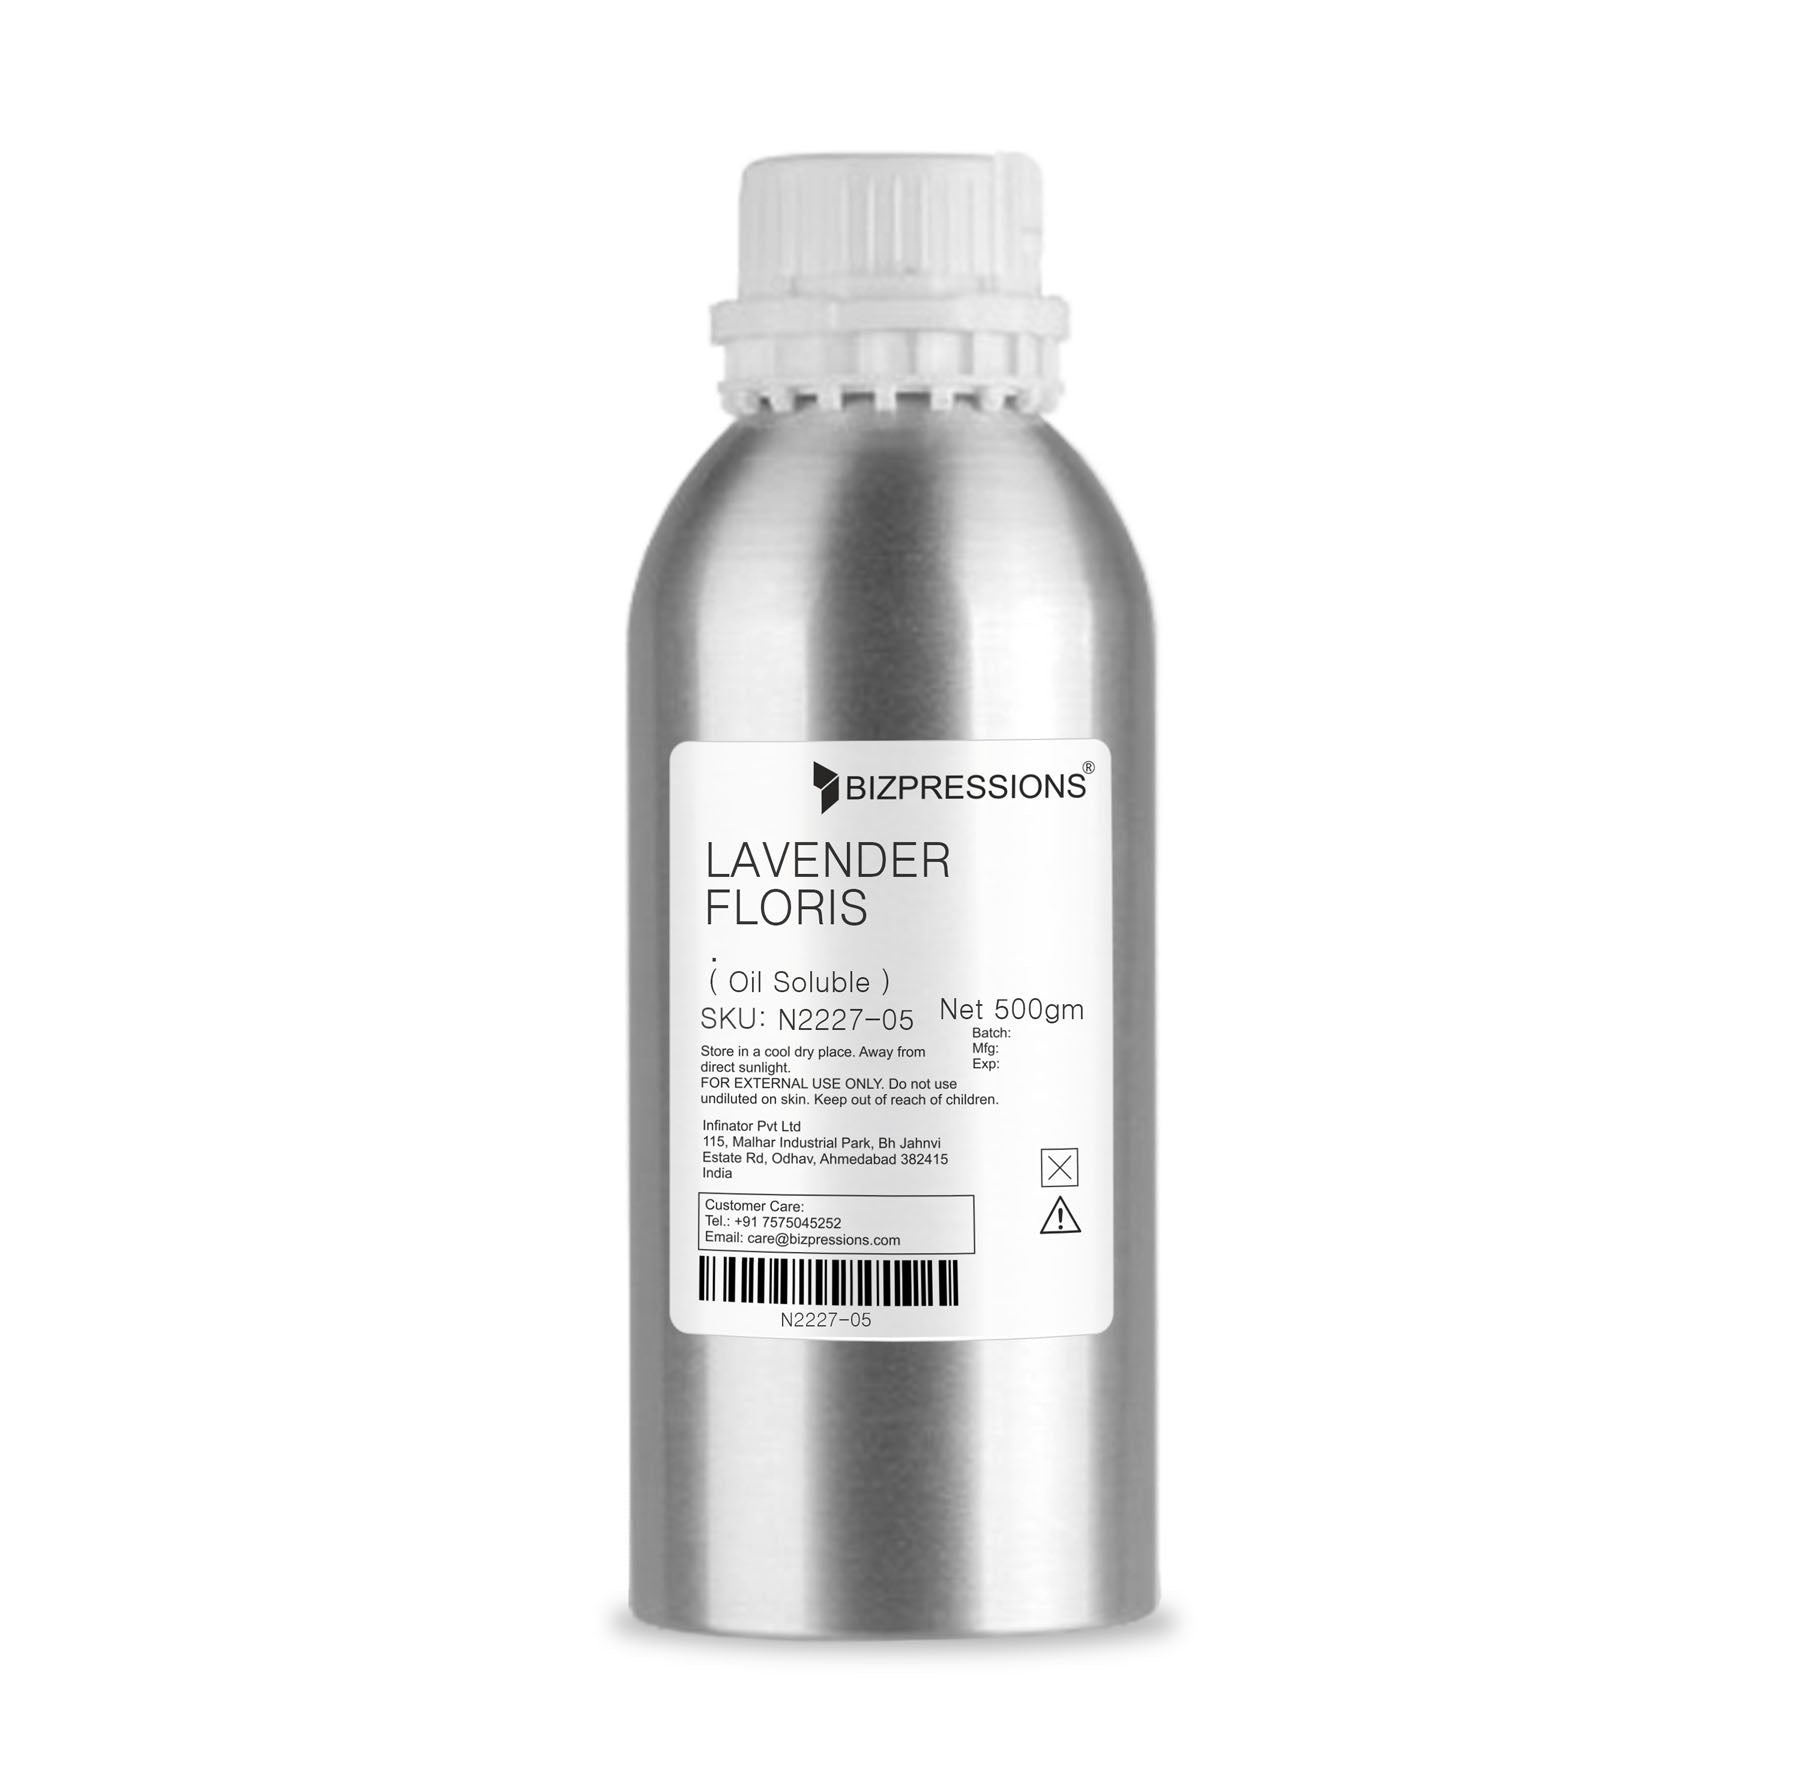 LAVENDER FLORIS - Fragrance ( Oil Soluble ) - 500 gm